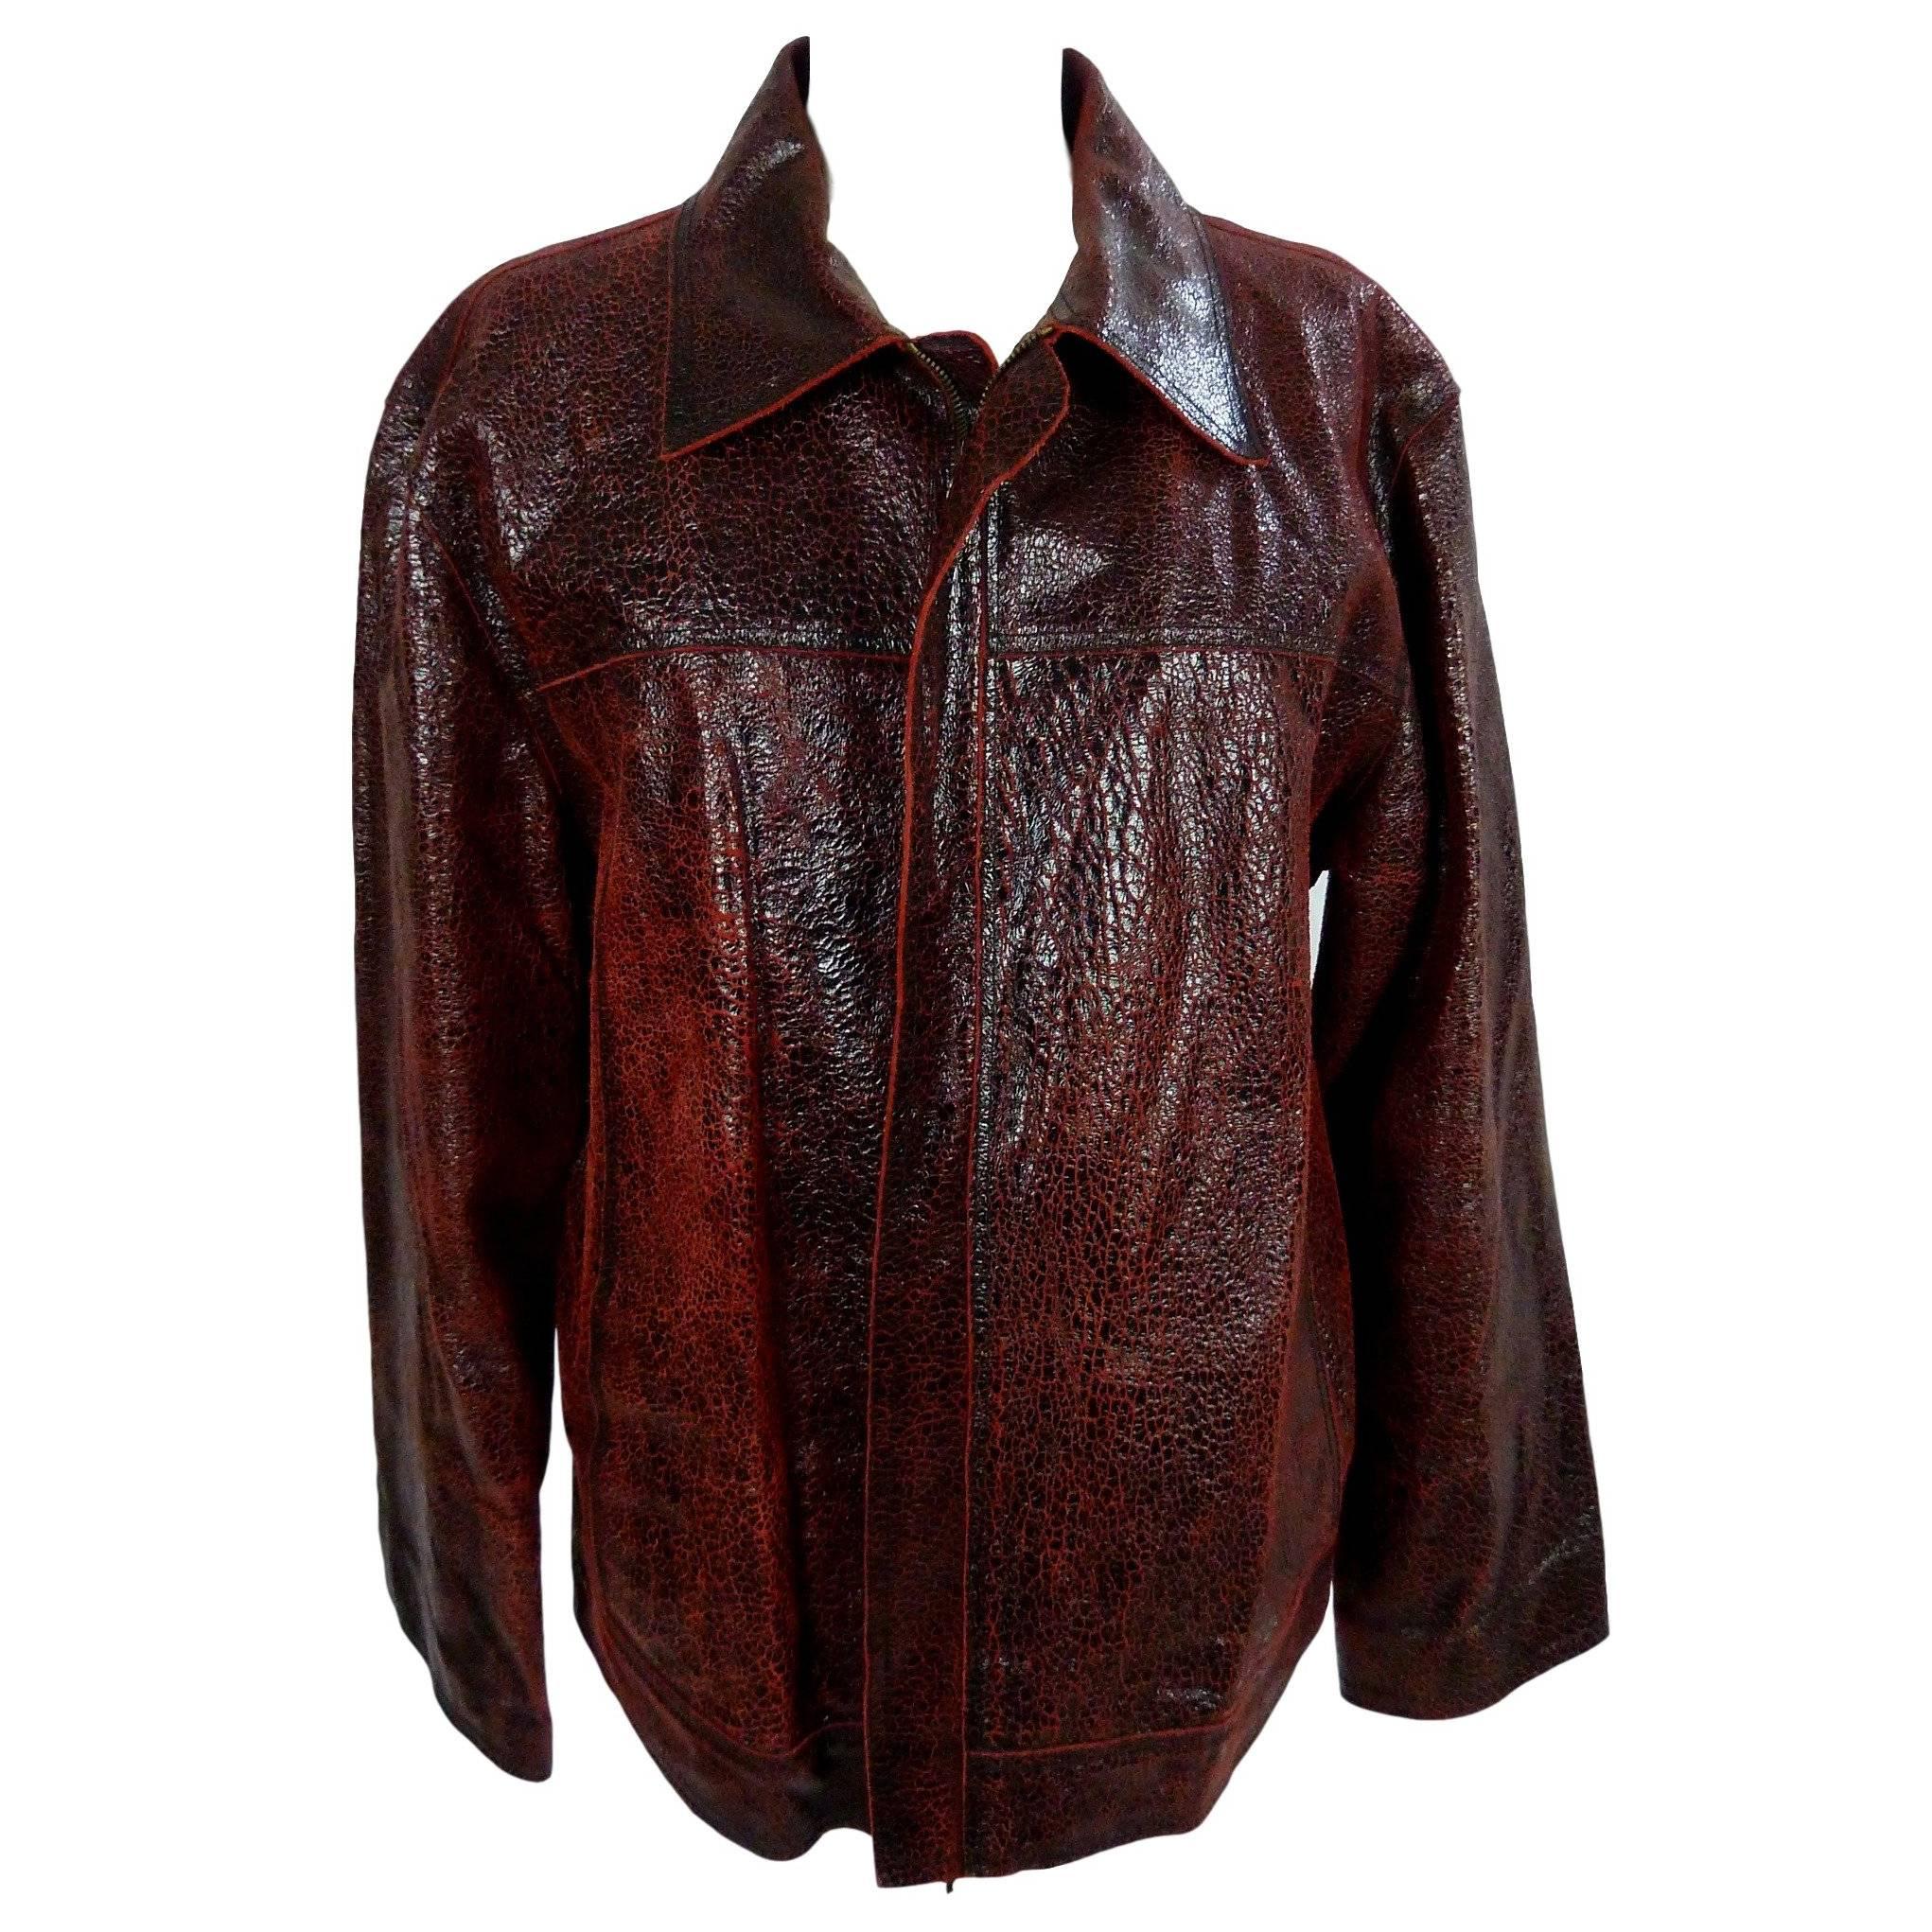 Roberto Cavalli leather jacket men motorcycle plum wine sz L luxury bordeaux